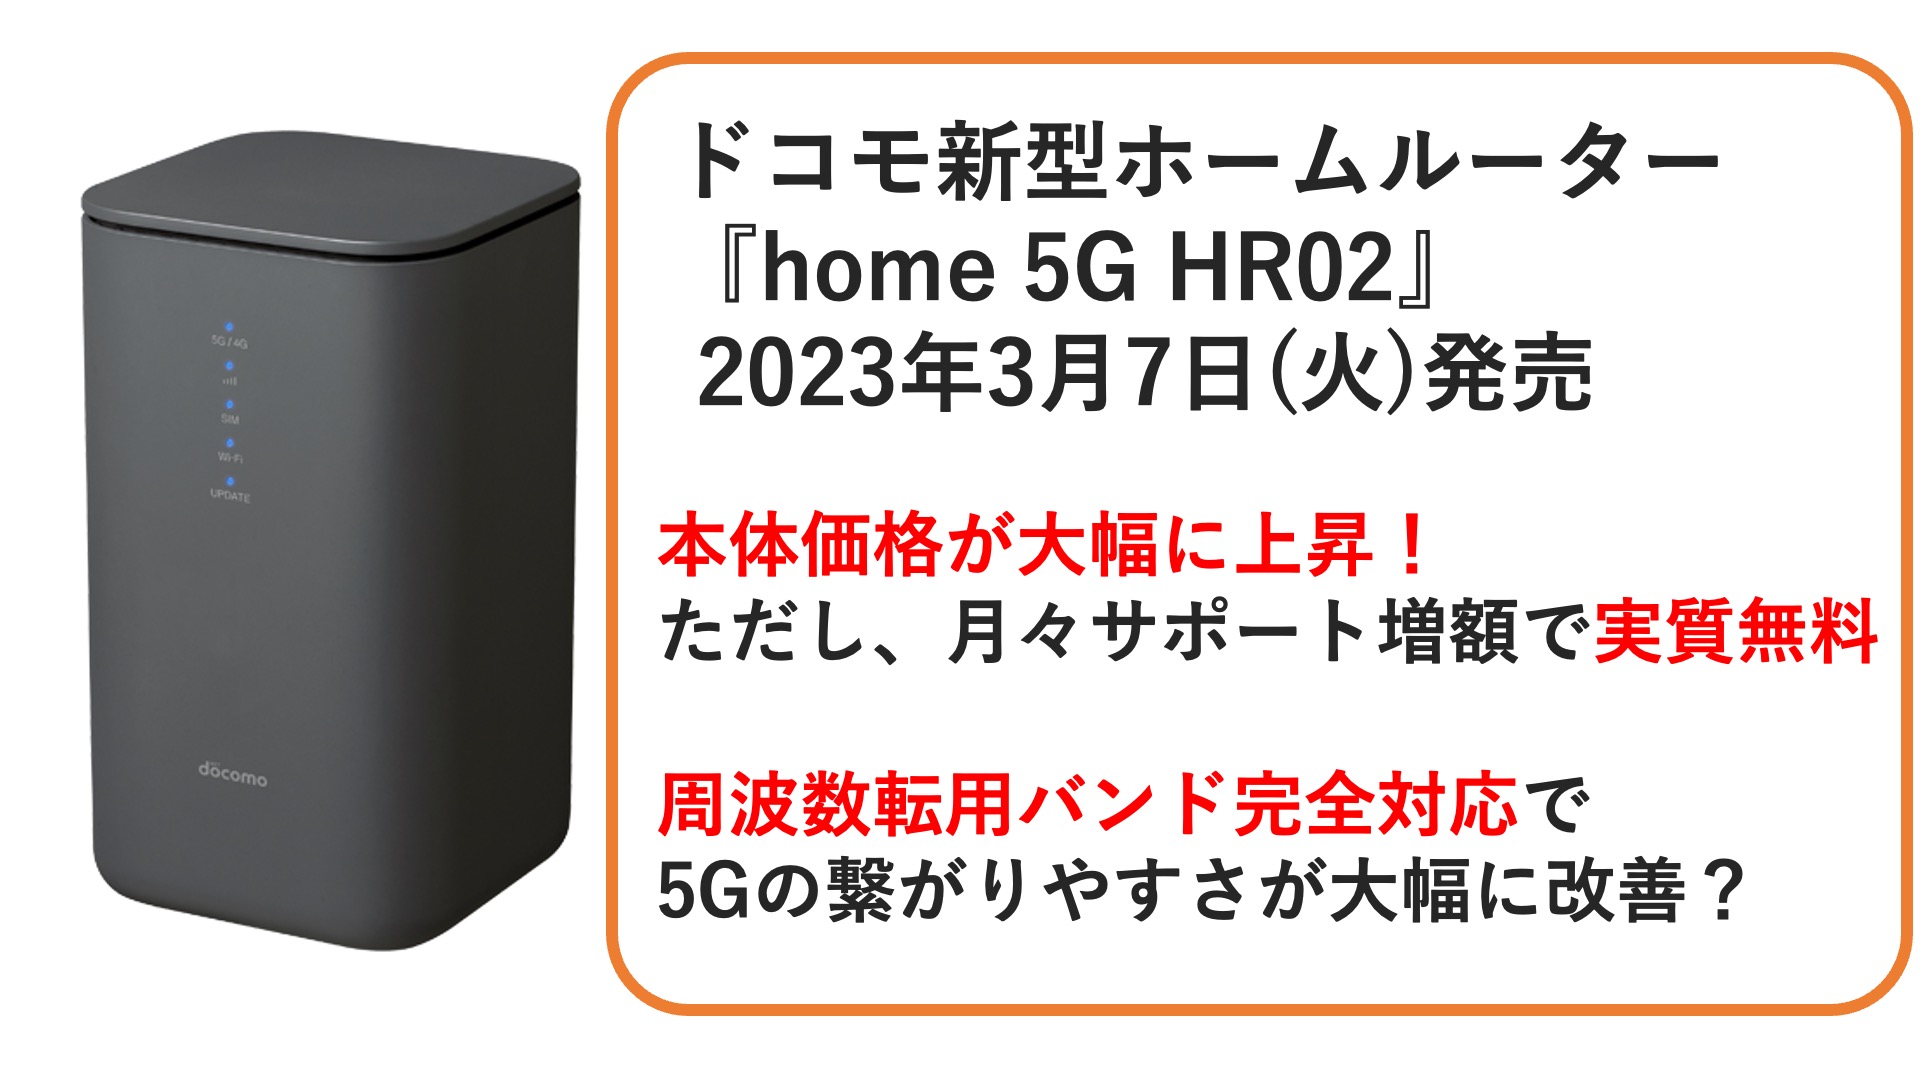 NTTドコモの新型ホームルーター「home 5G HR02」が、2023年3月7日(火 